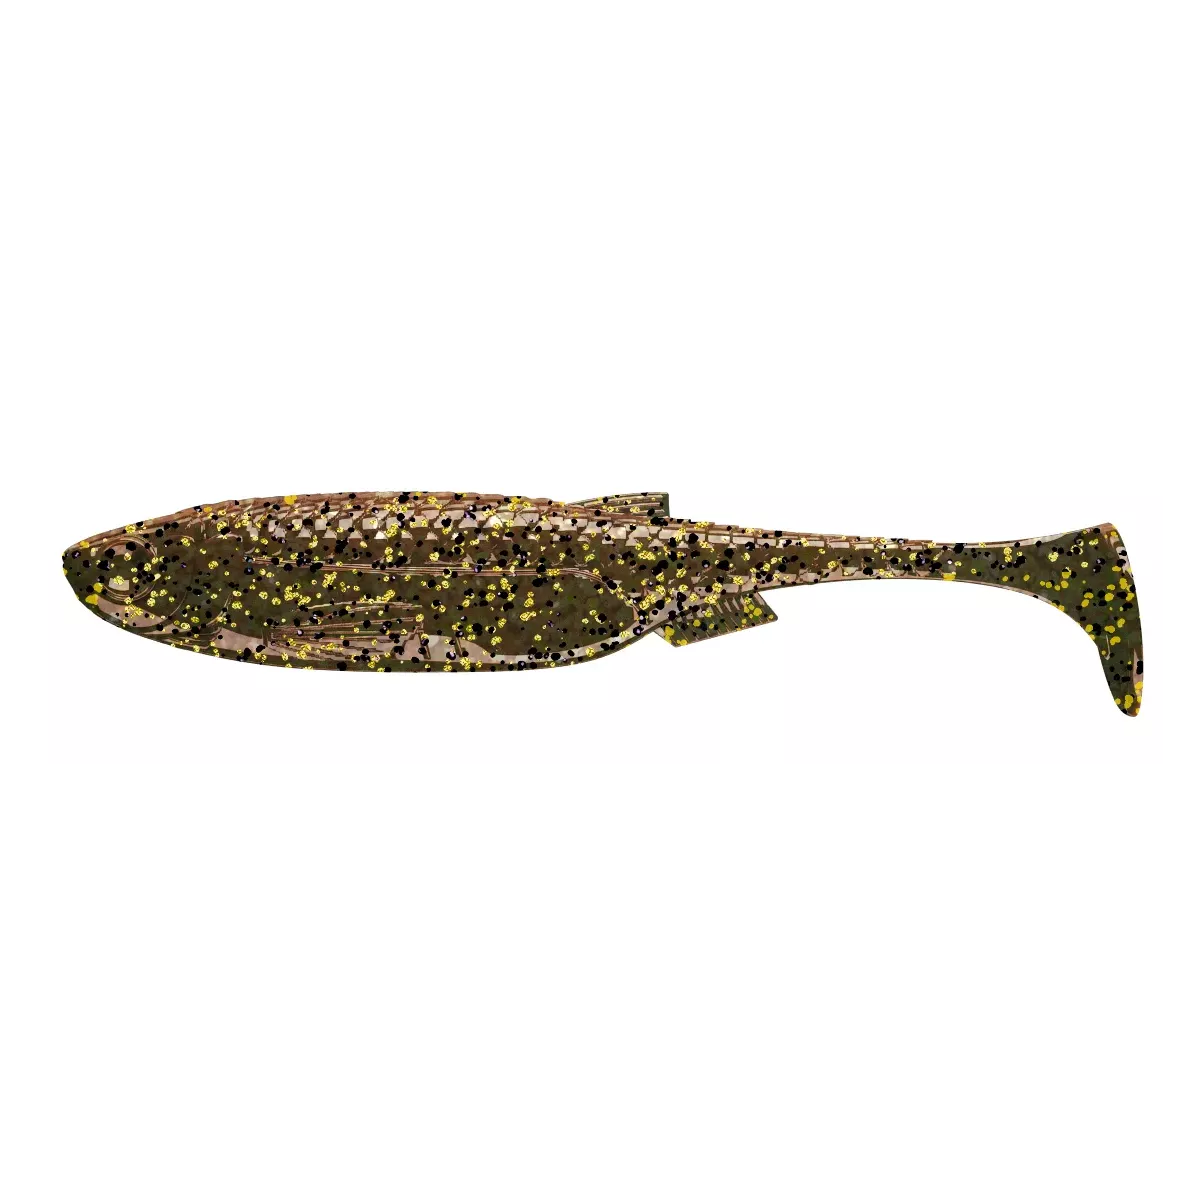 Libra Lures Kraken Shad 2'' 5cm - 033 / MOTOR OIL BROWN